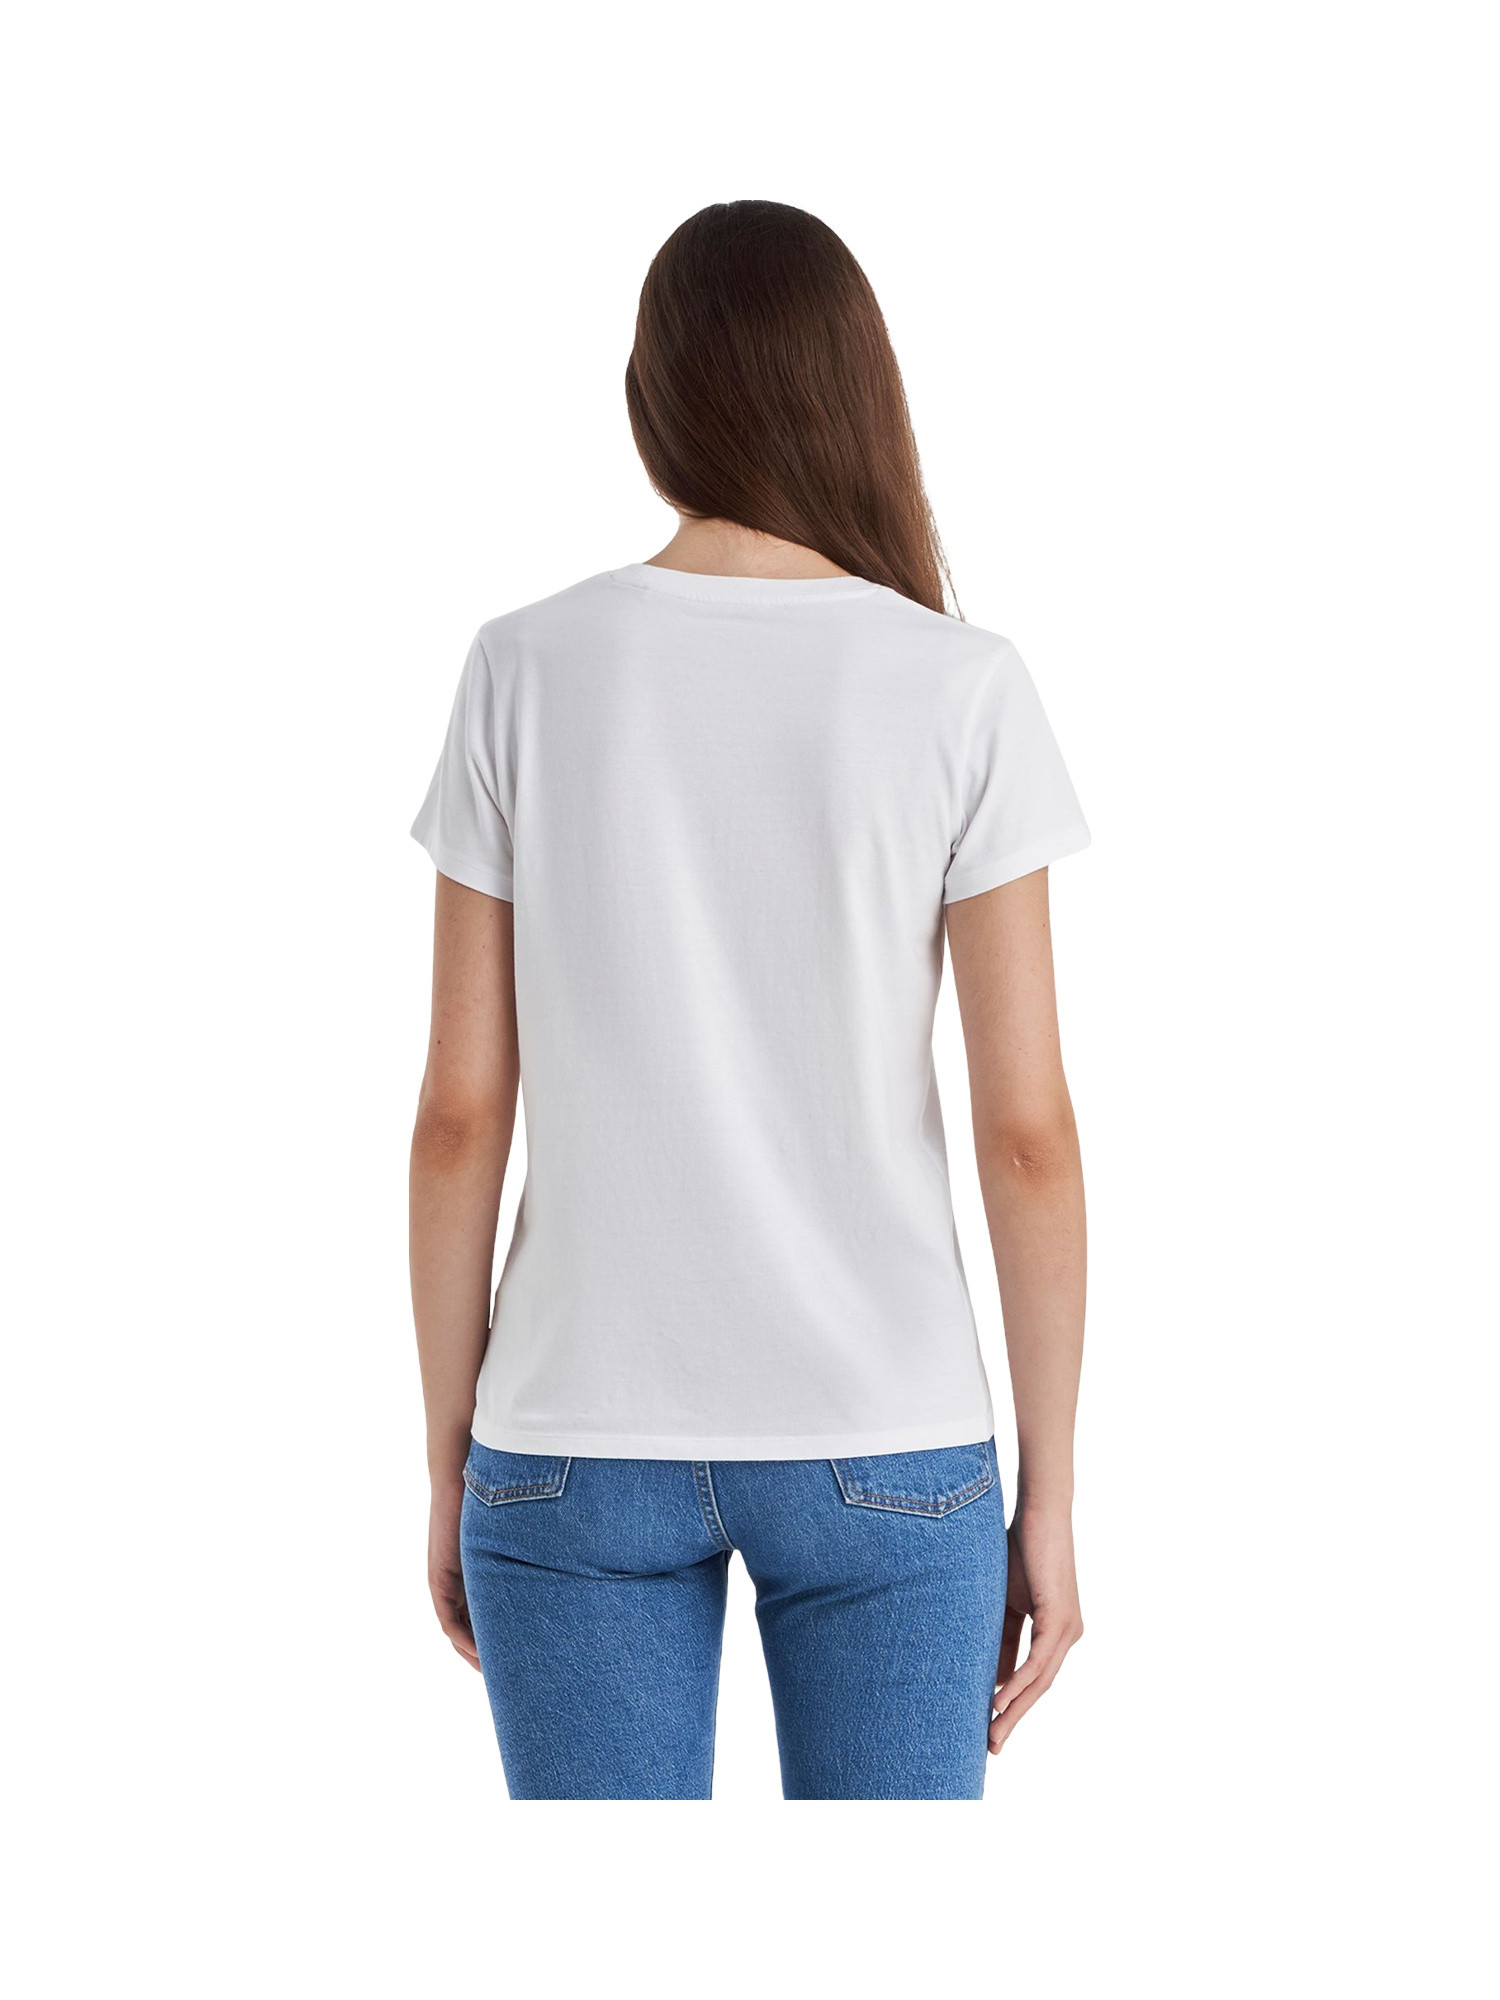 Levi's - T-shirt con logo floreale, Bianco, large image number 3